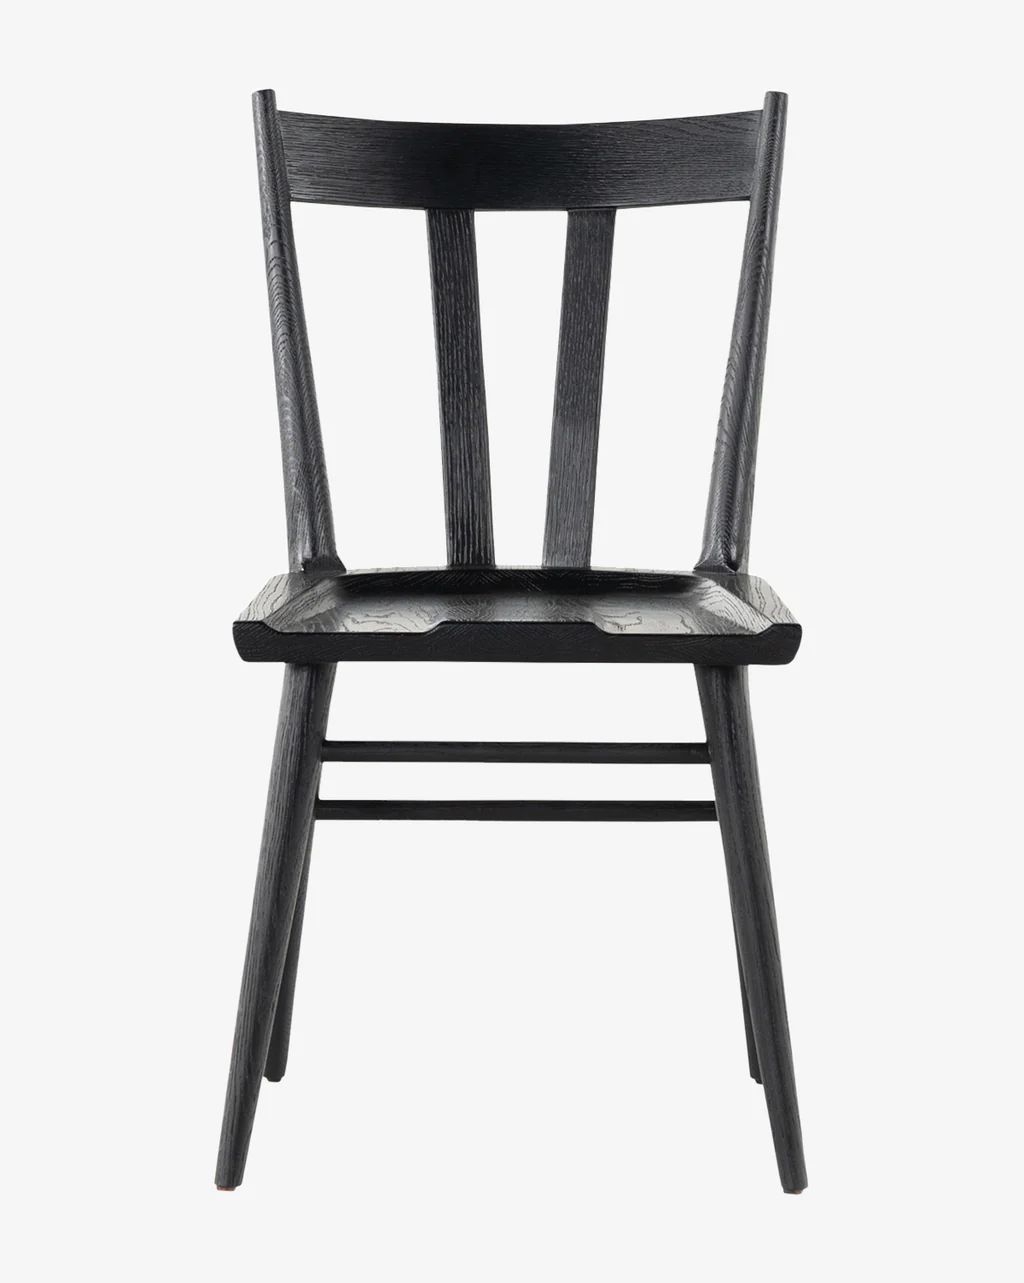 Lahargoue Chair | McGee & Co.